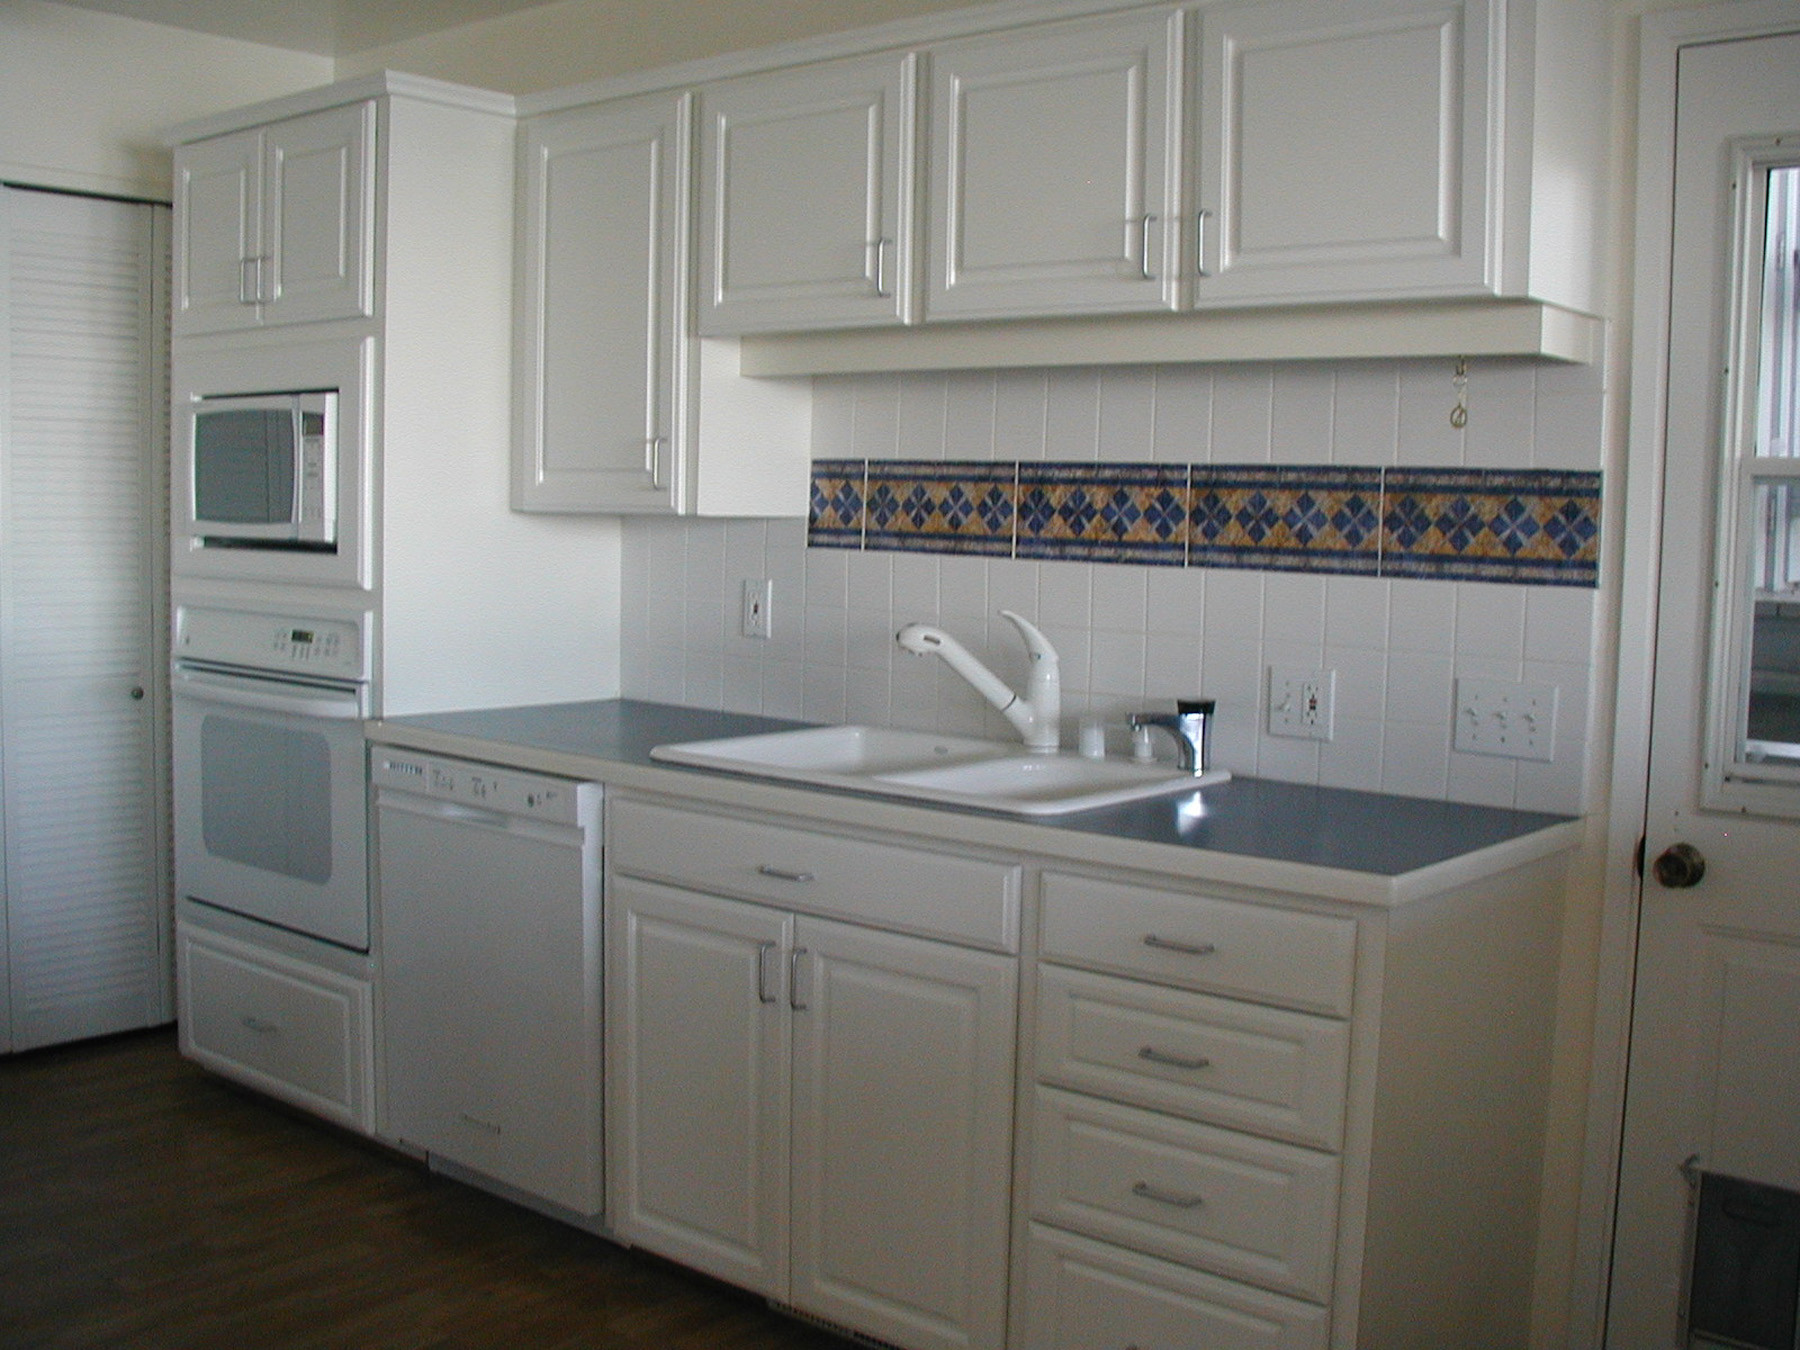 Kitchen Tiles Design
 Include decorative tile in your kitchen or bath design